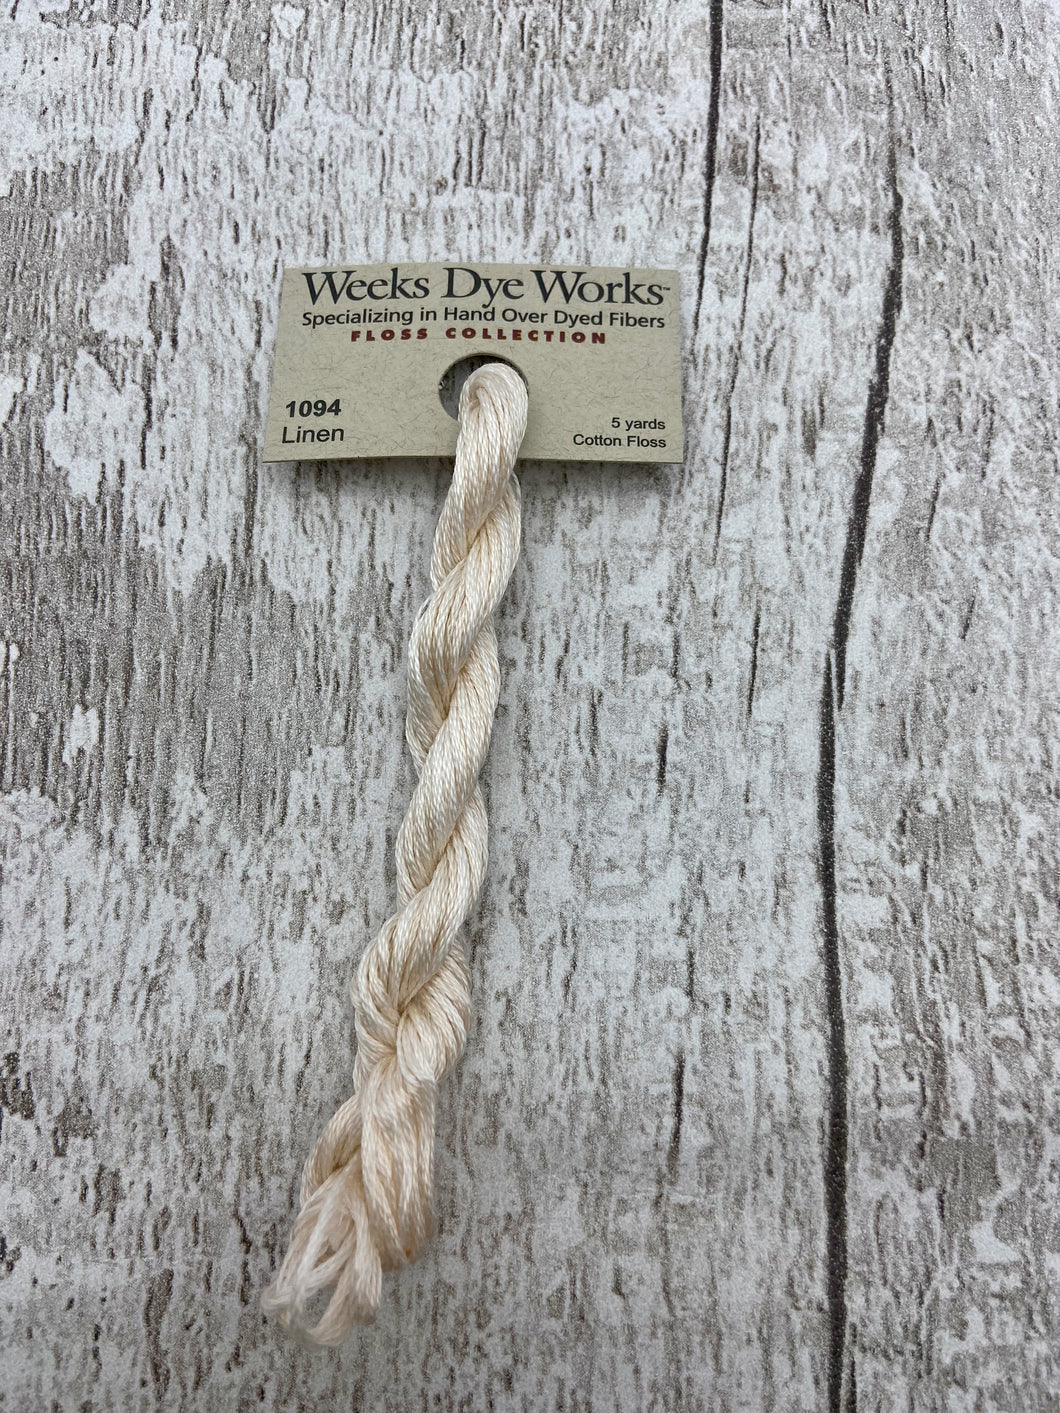 Linen (#1094) Weeks Dye Works, 6-strand cotton floss